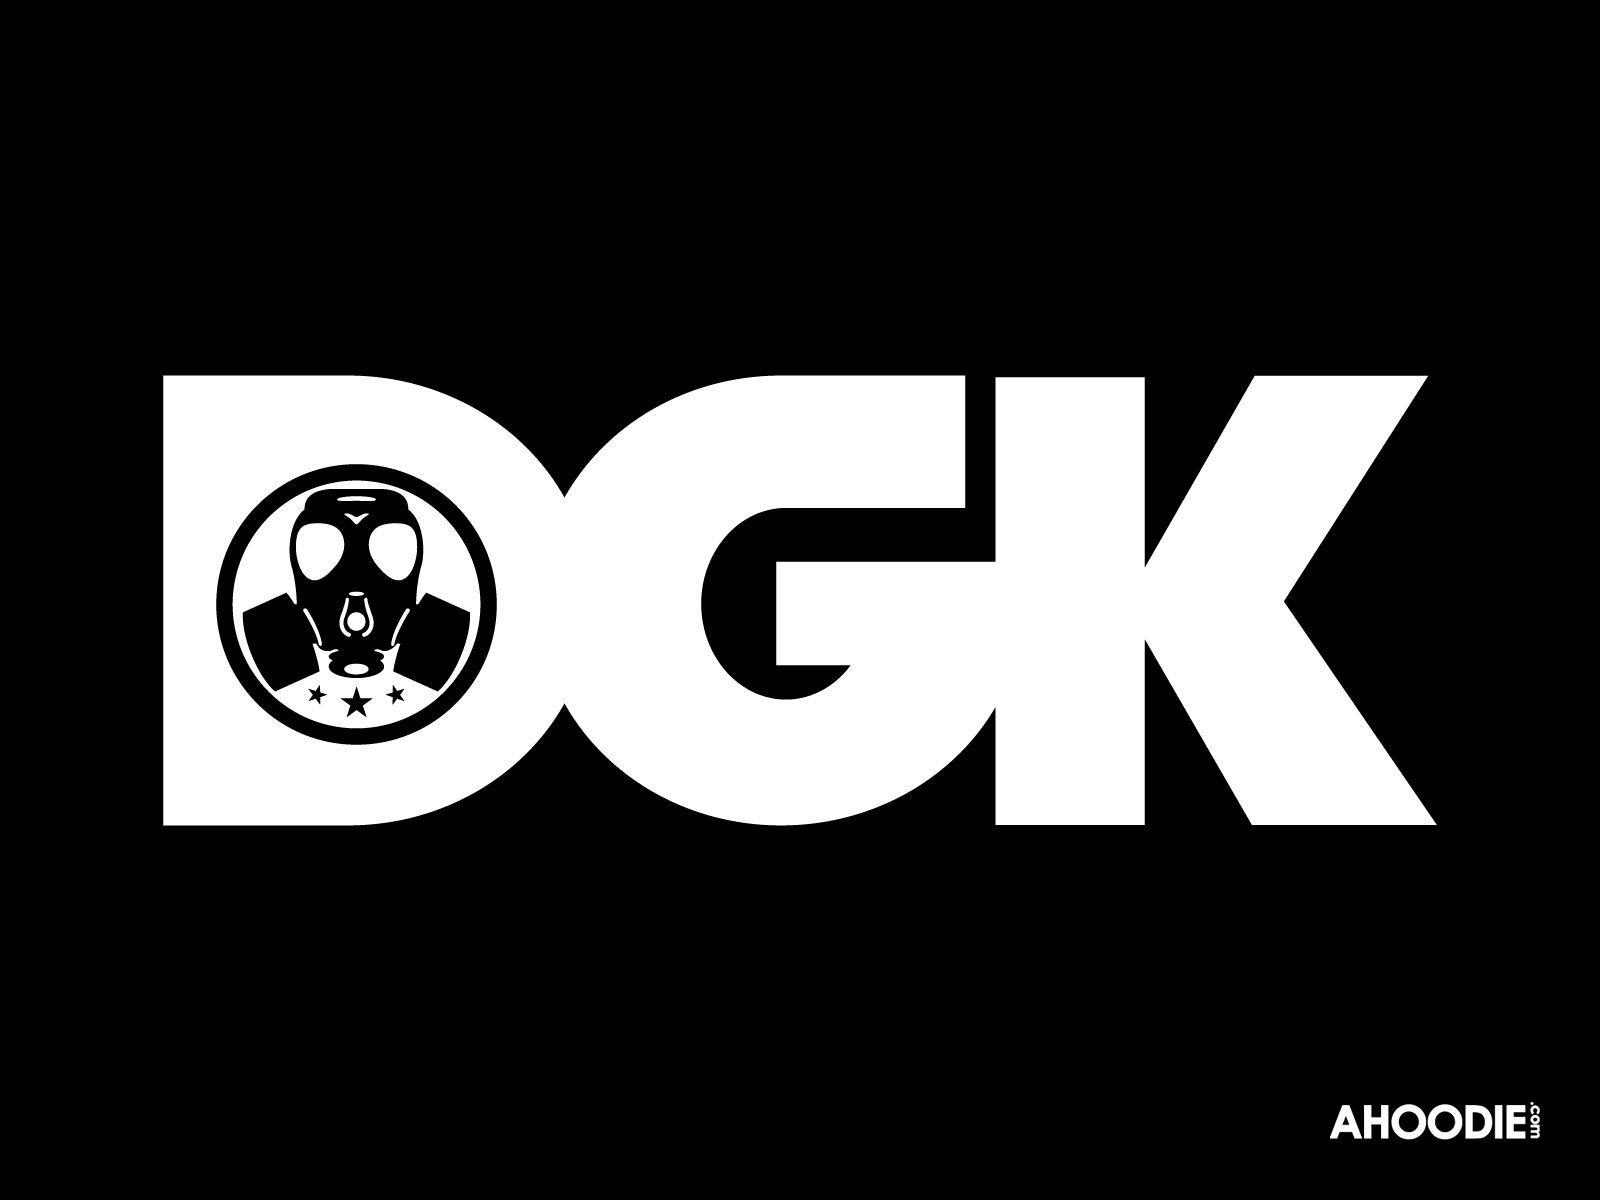 DGK Logo - I like the DGK logo because it feels very bold, and I like how the ...